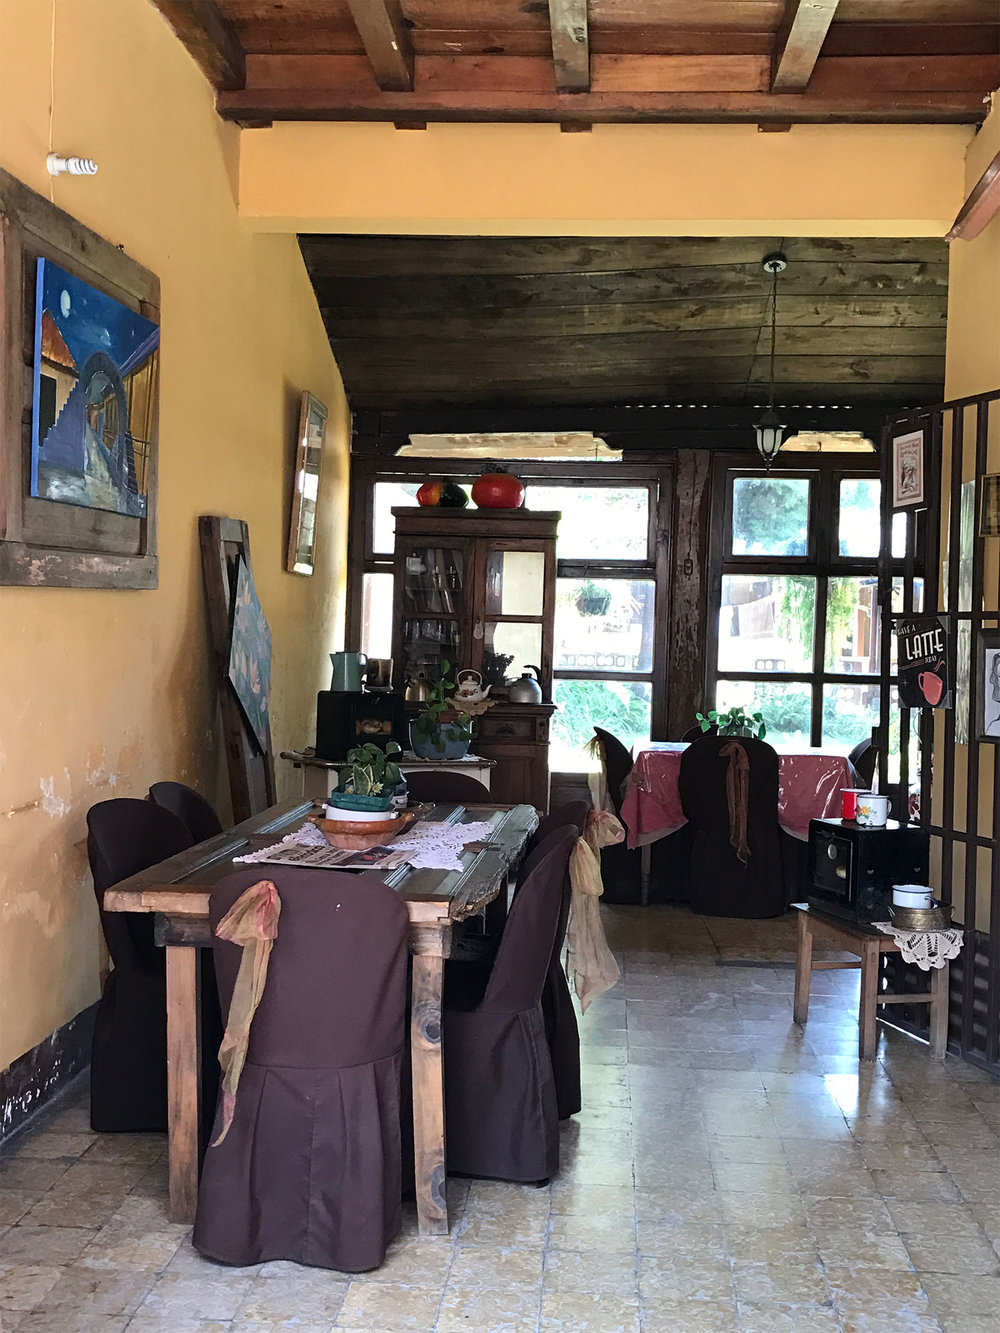 Cafe in Antigua, Guatemala